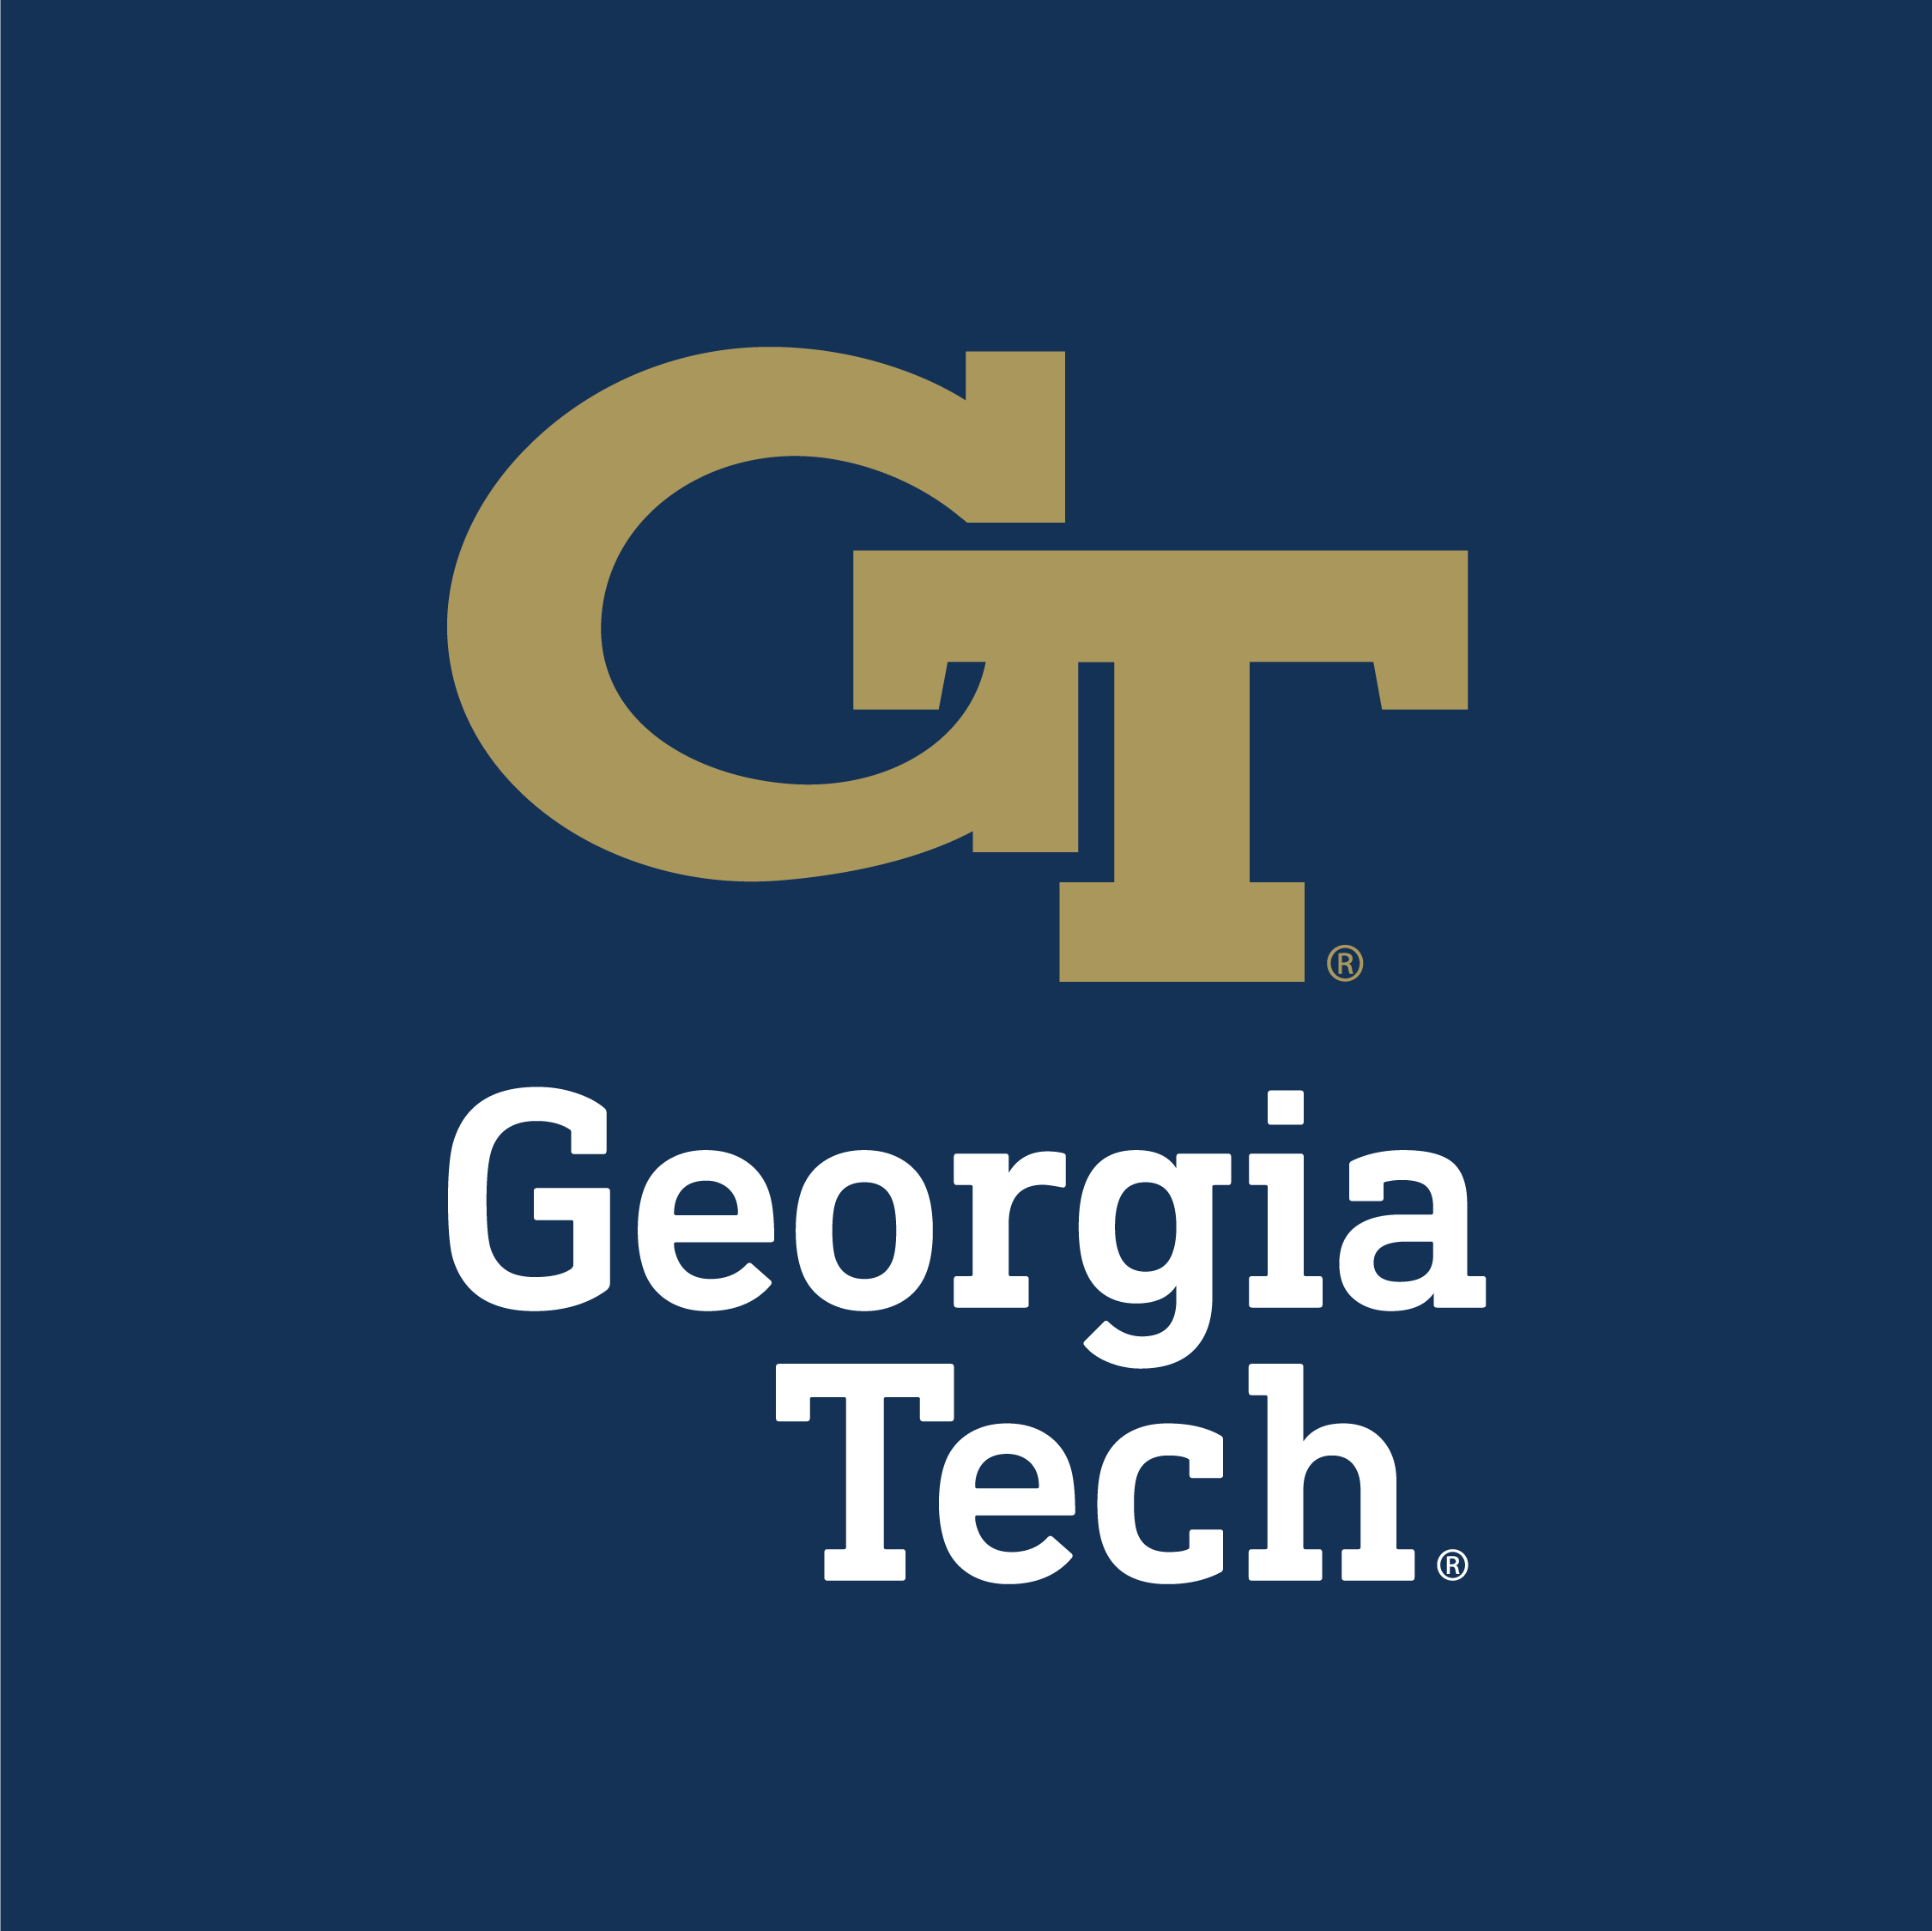 gt_logo-02.png